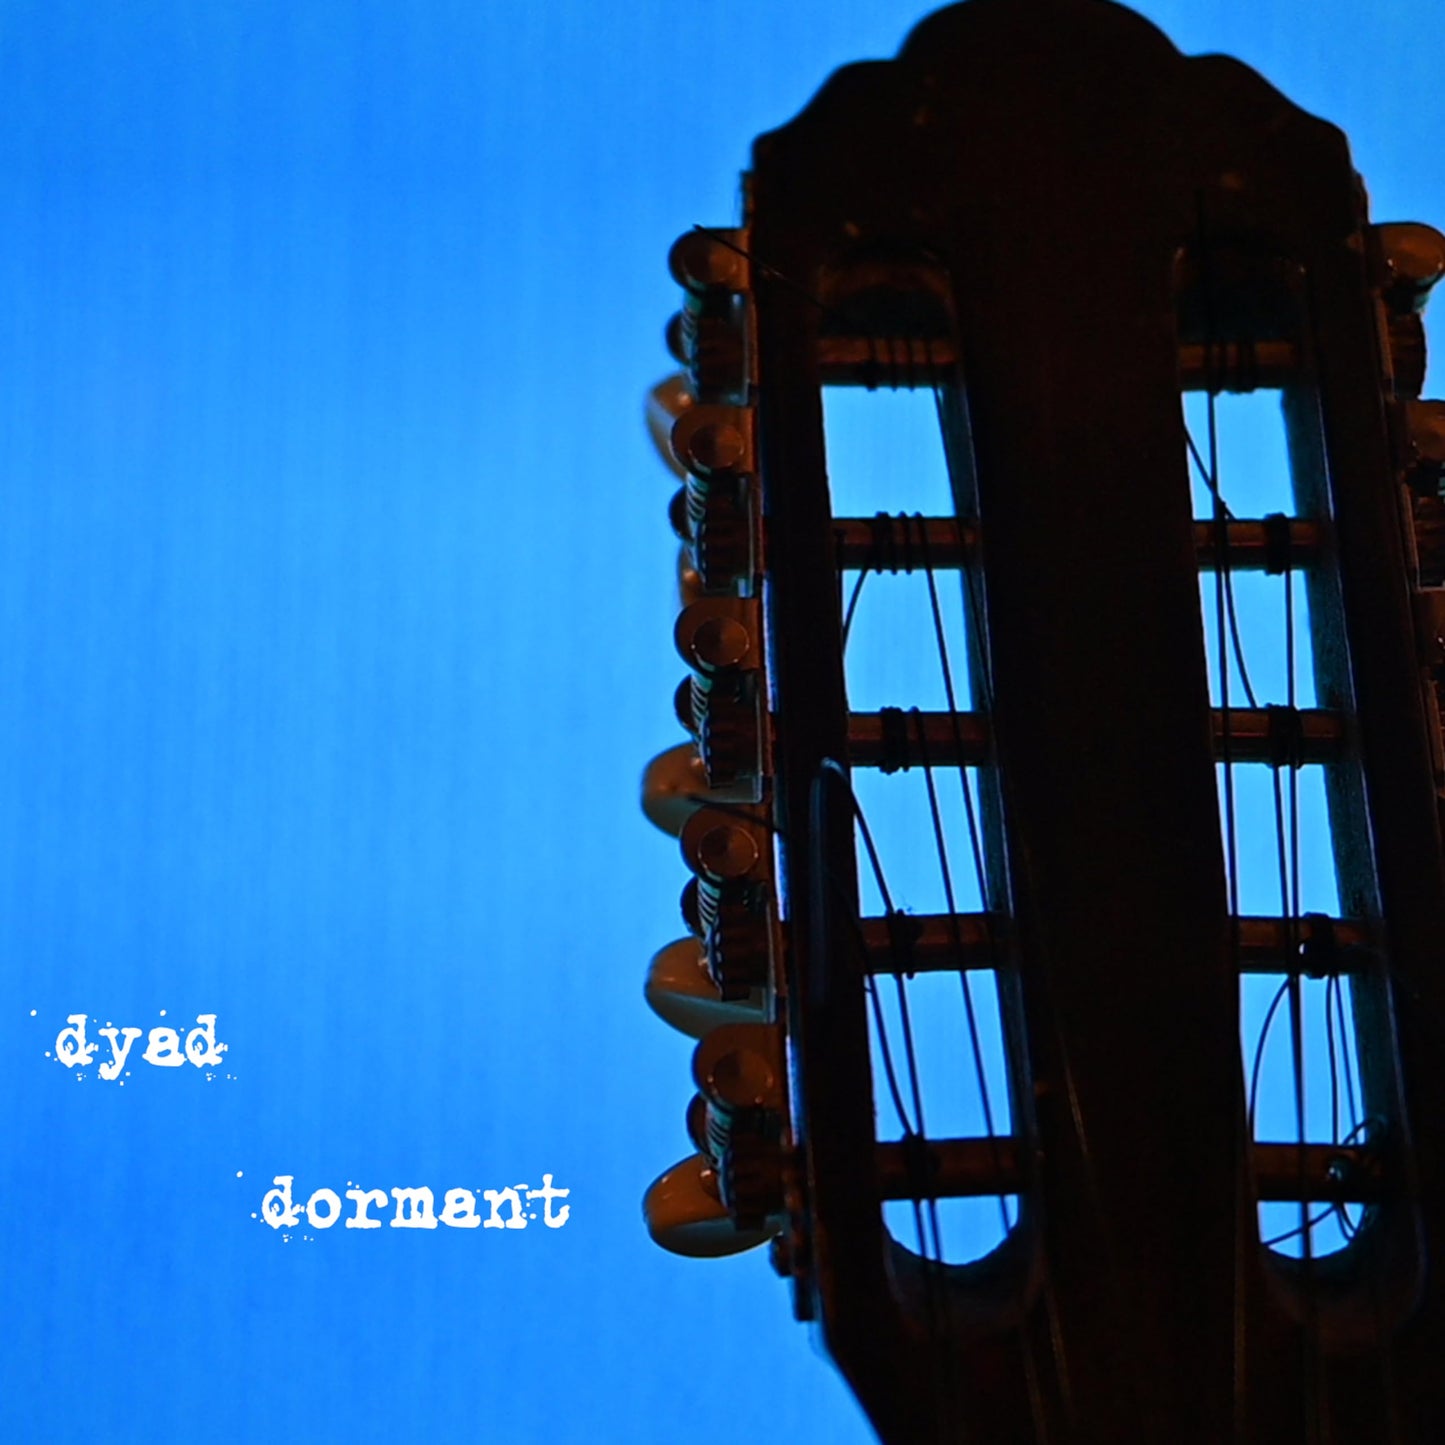 Dyad - Dormant - Import CD